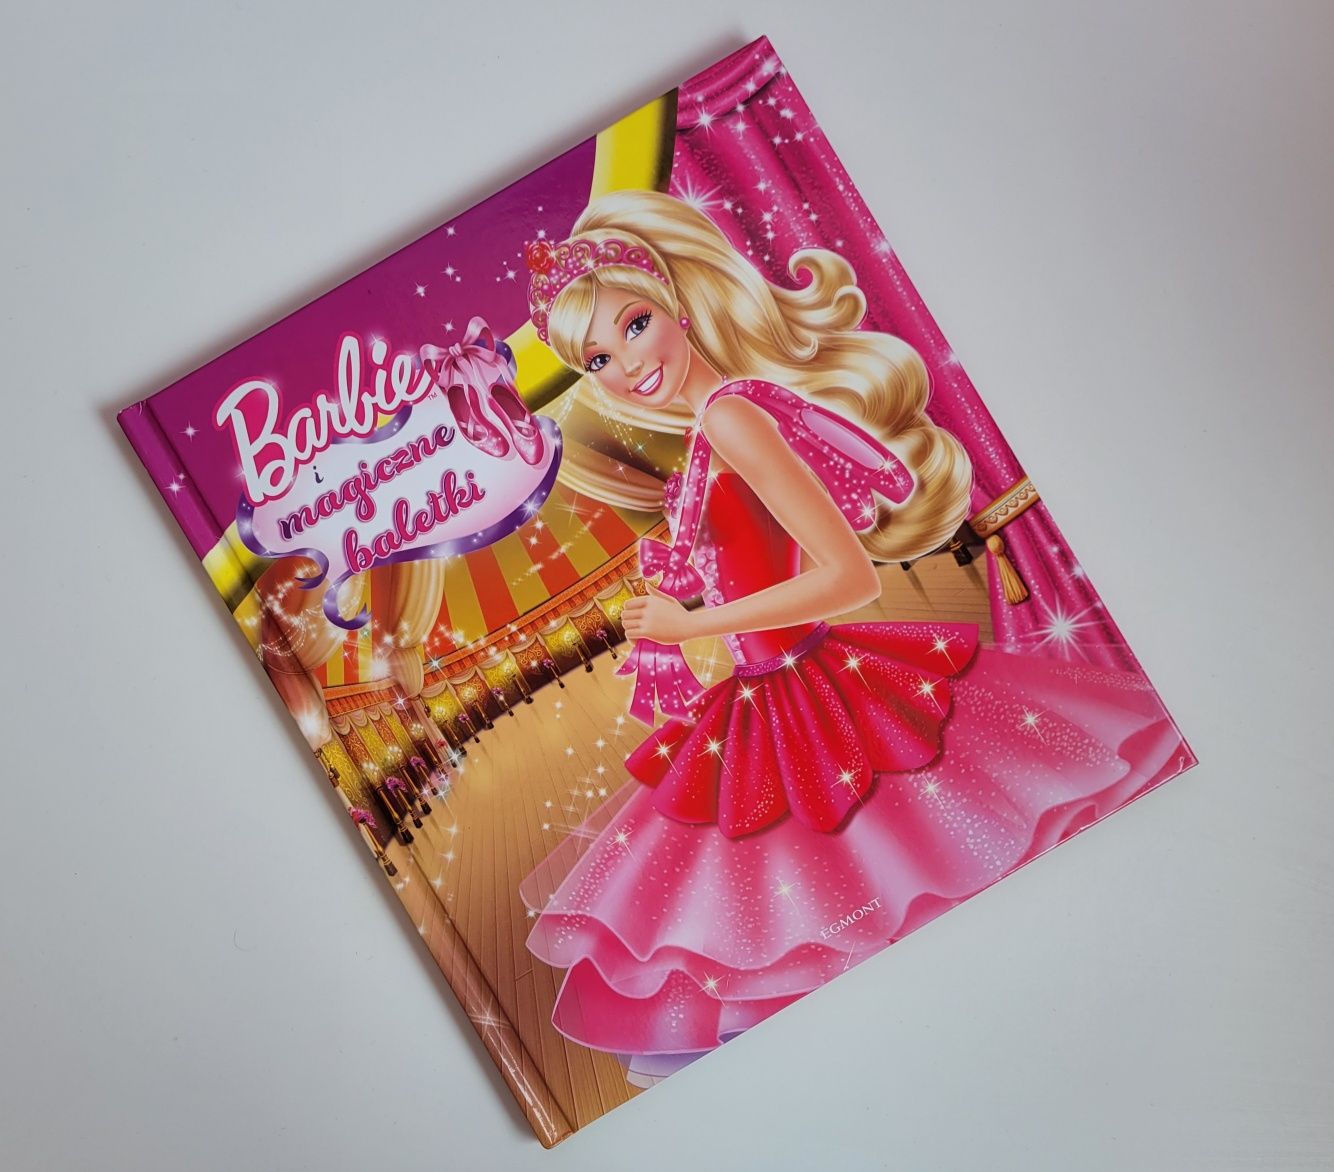 Książka pt: "Barbie i magiczne baletki"